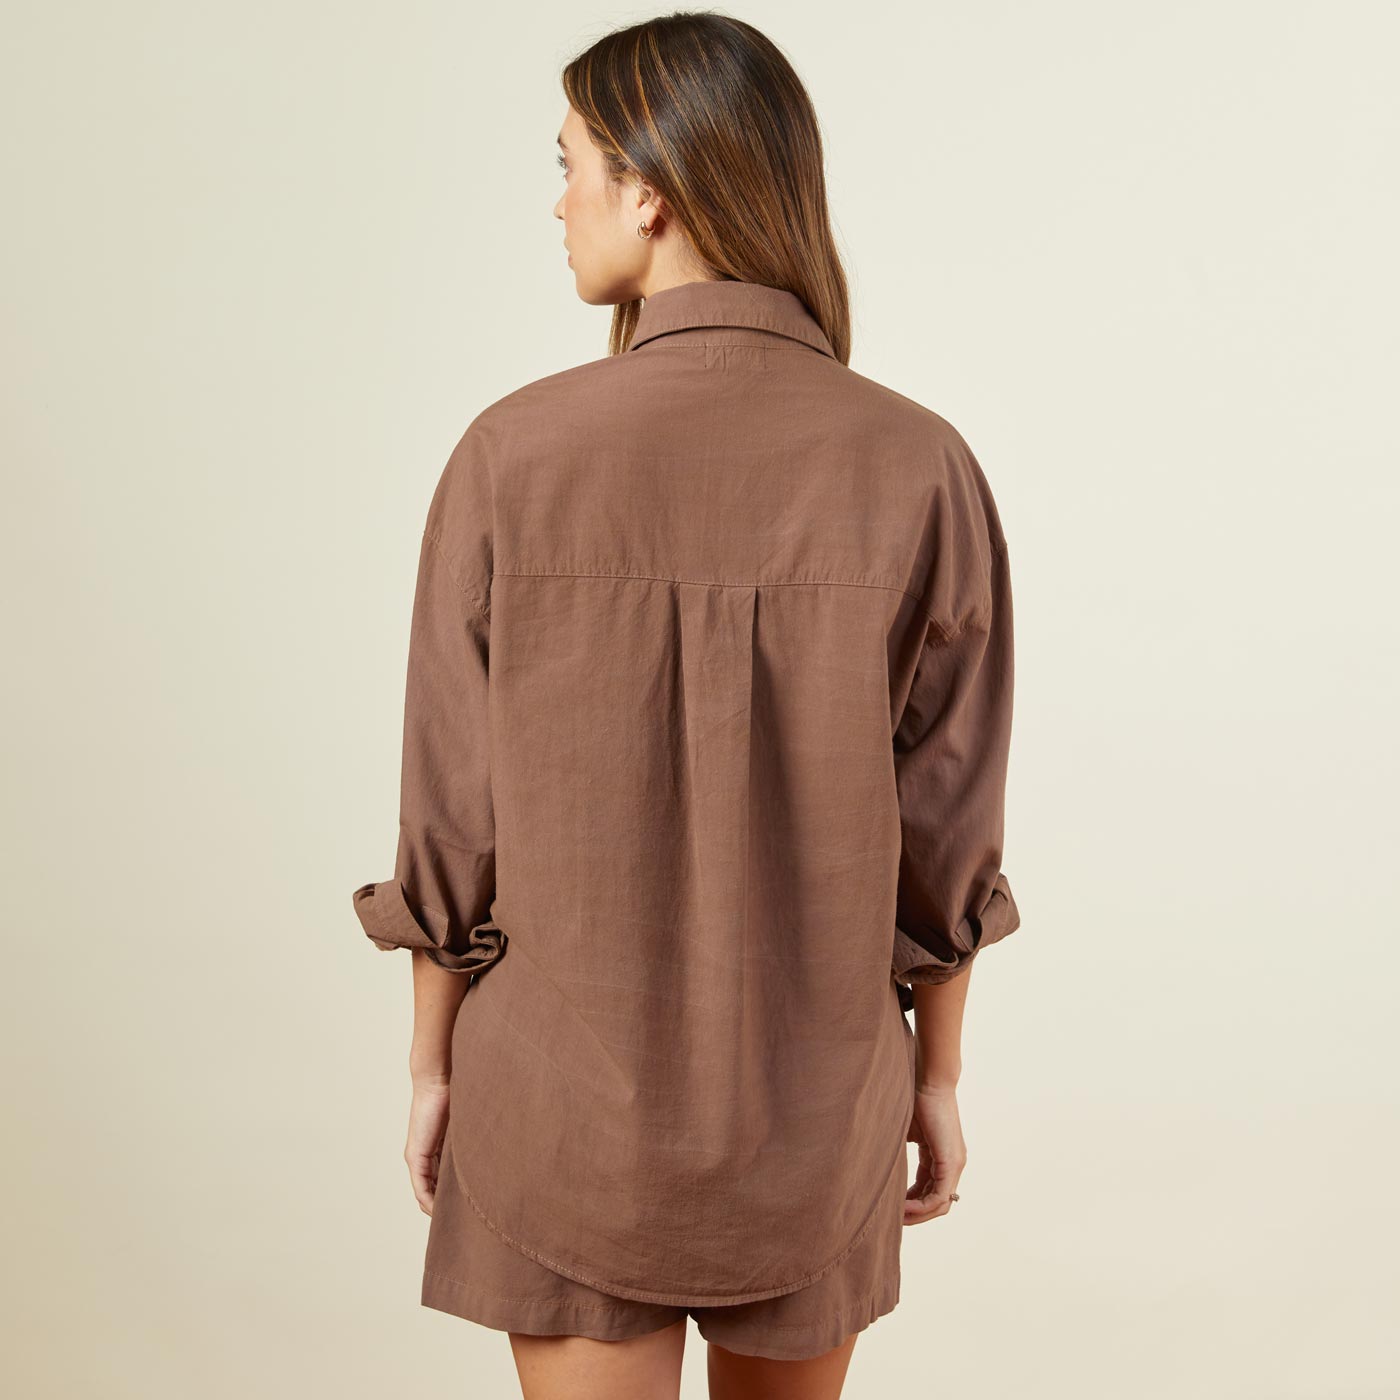 Back view of model wearing the poplin shirt in dusty cocoa.